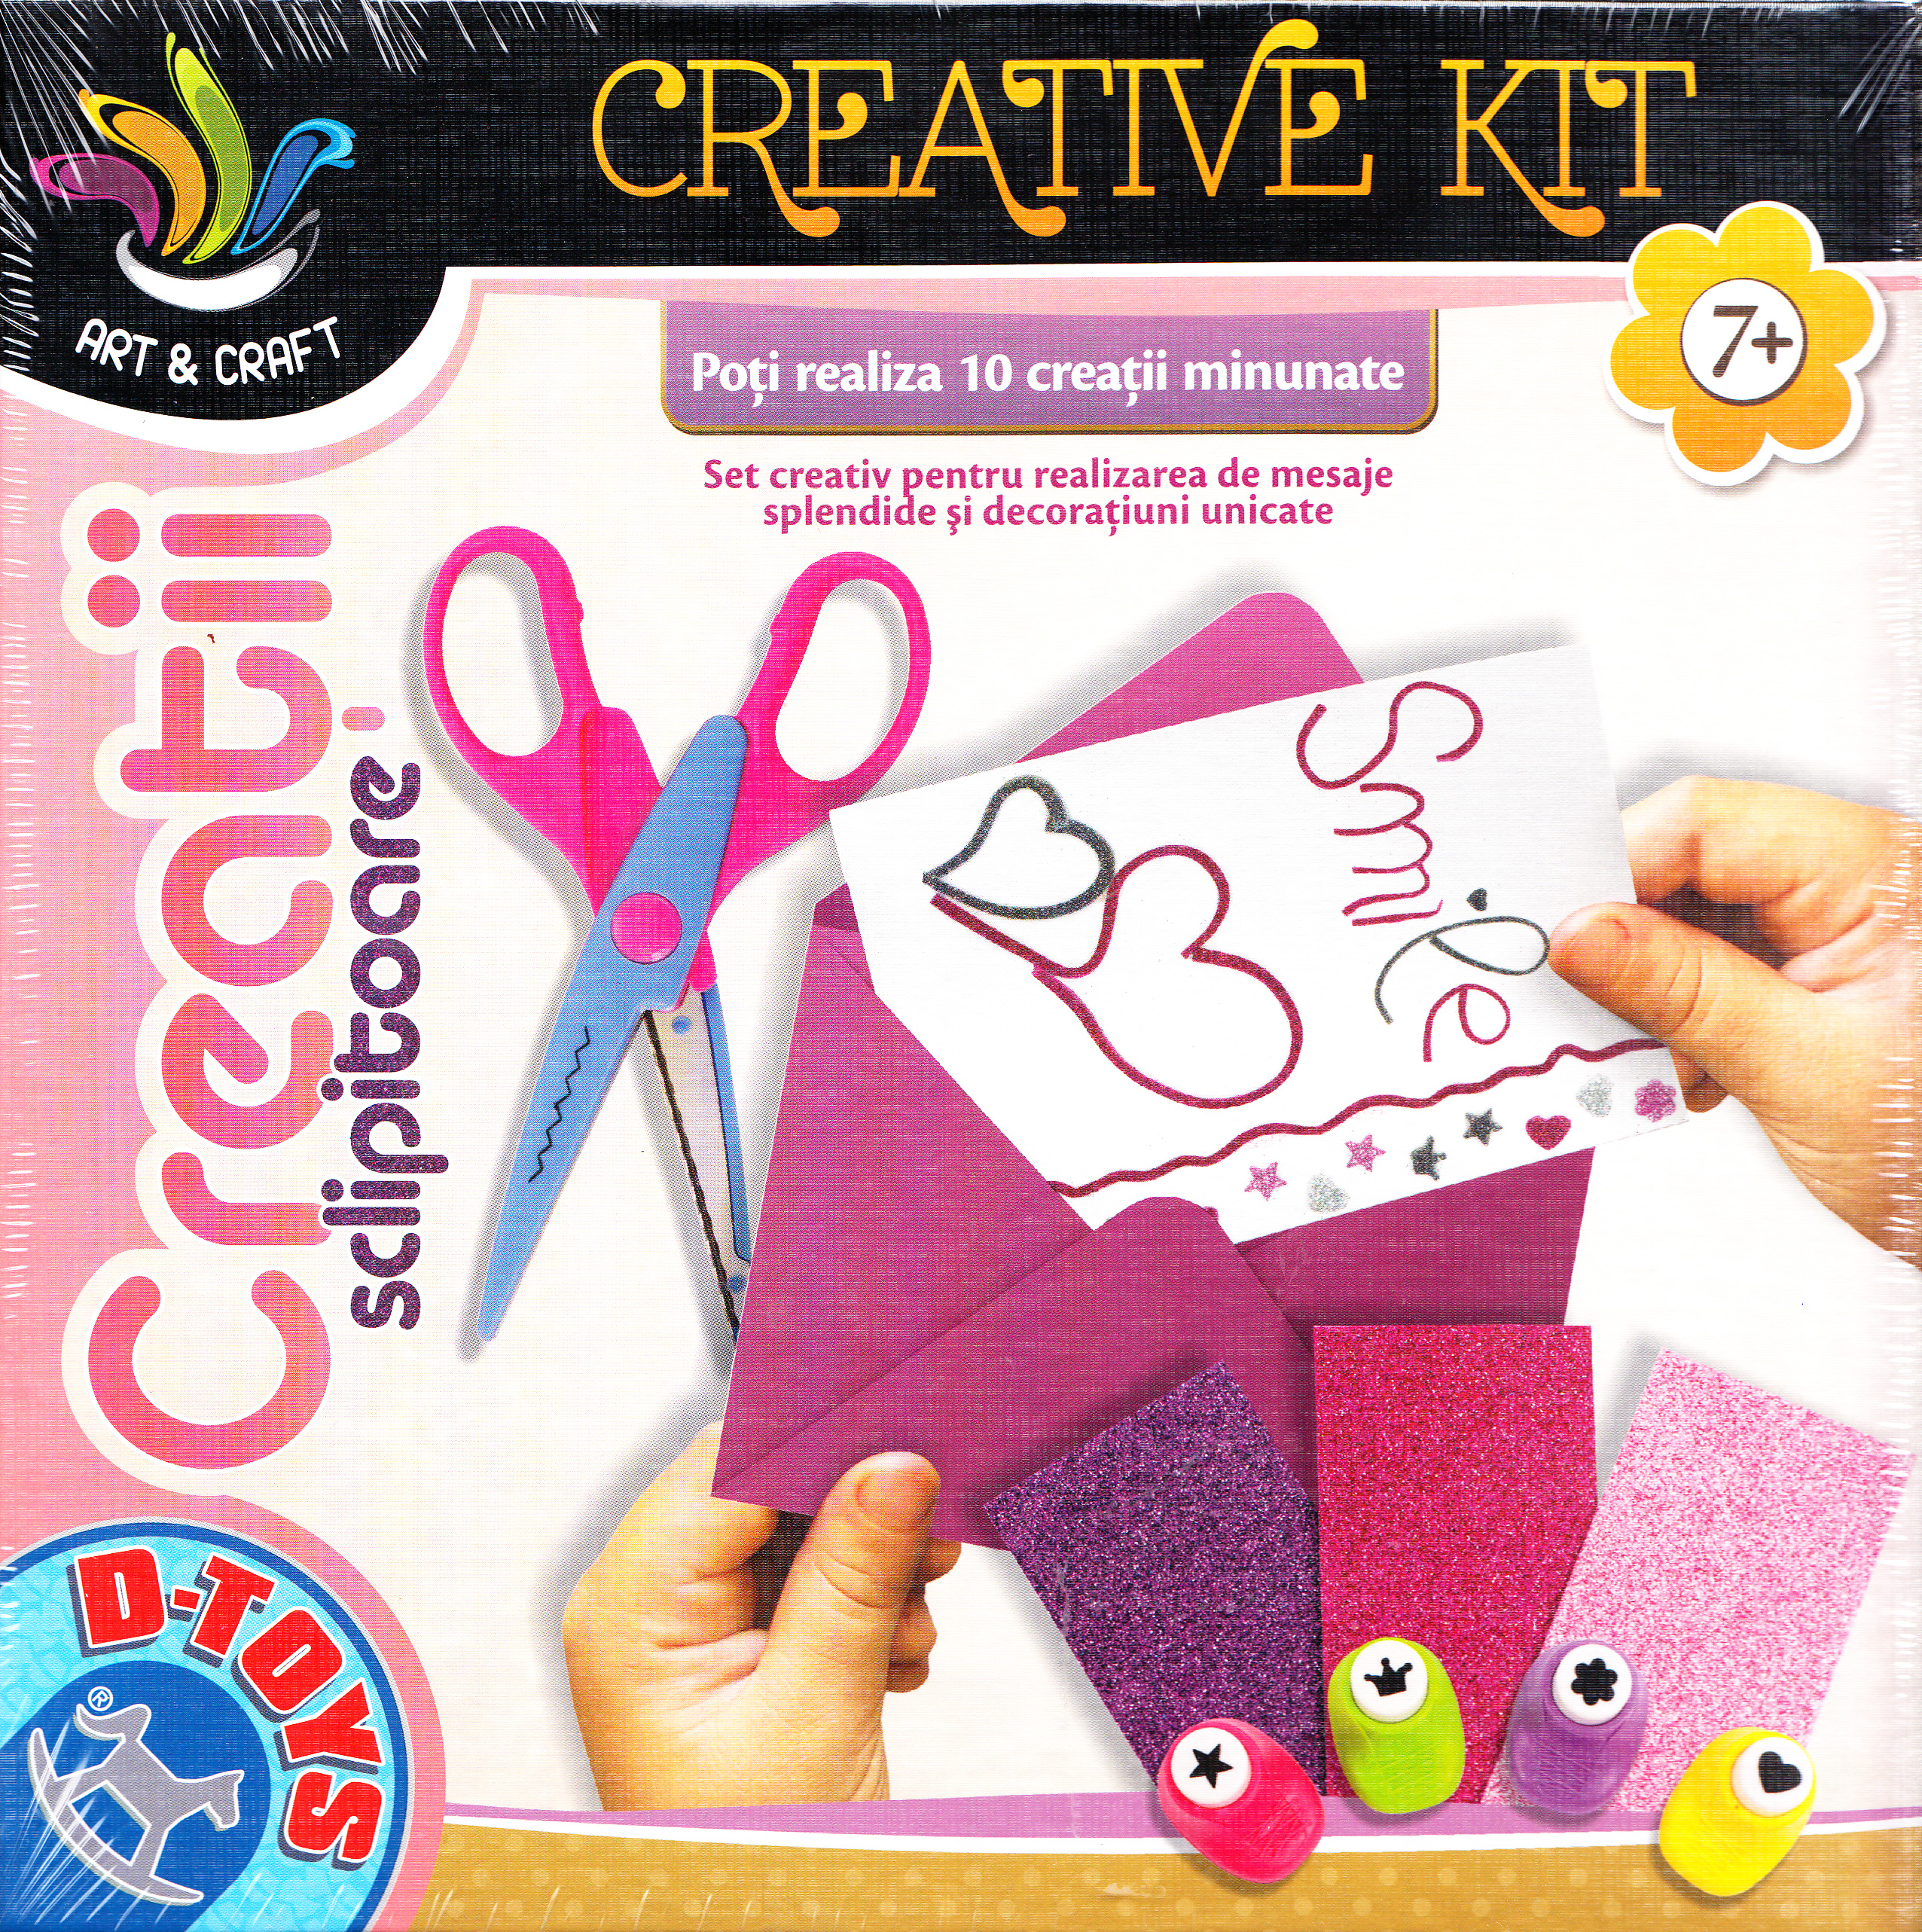 Creative Kit, Creatii sclipitoare